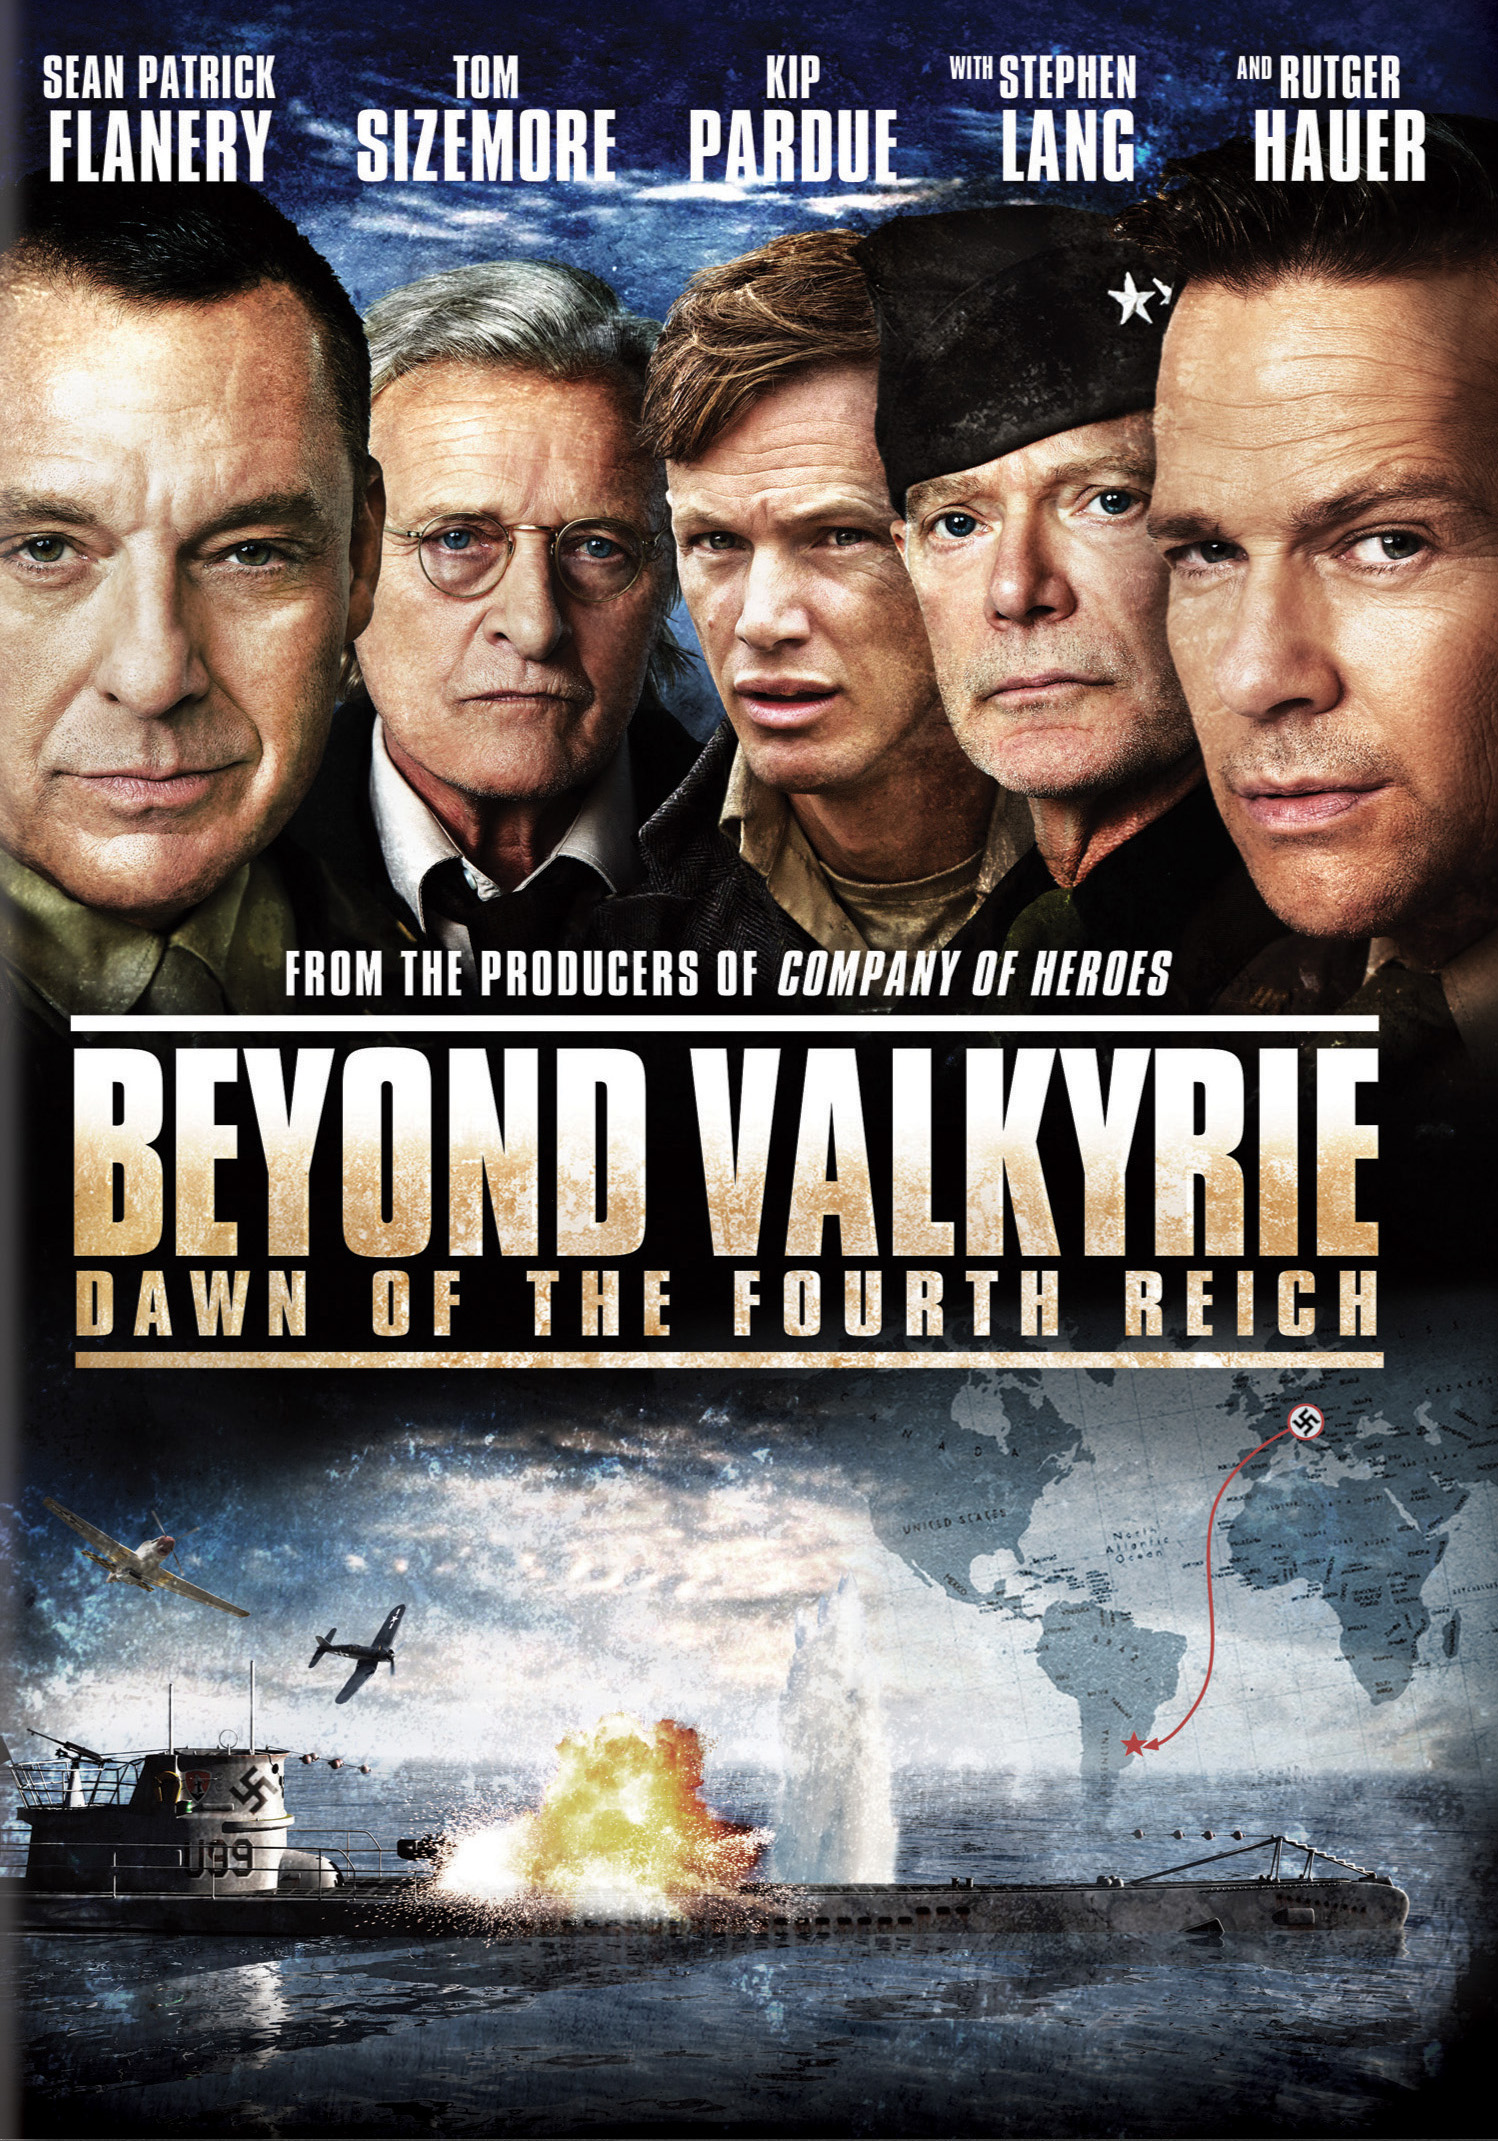 Beyond Valkyrie Dawn of the Fourth Reich (2016) ปฏิบัติการฝ่าสมรภูมิอินทรีเหล็ก Sean Patrick Flanery